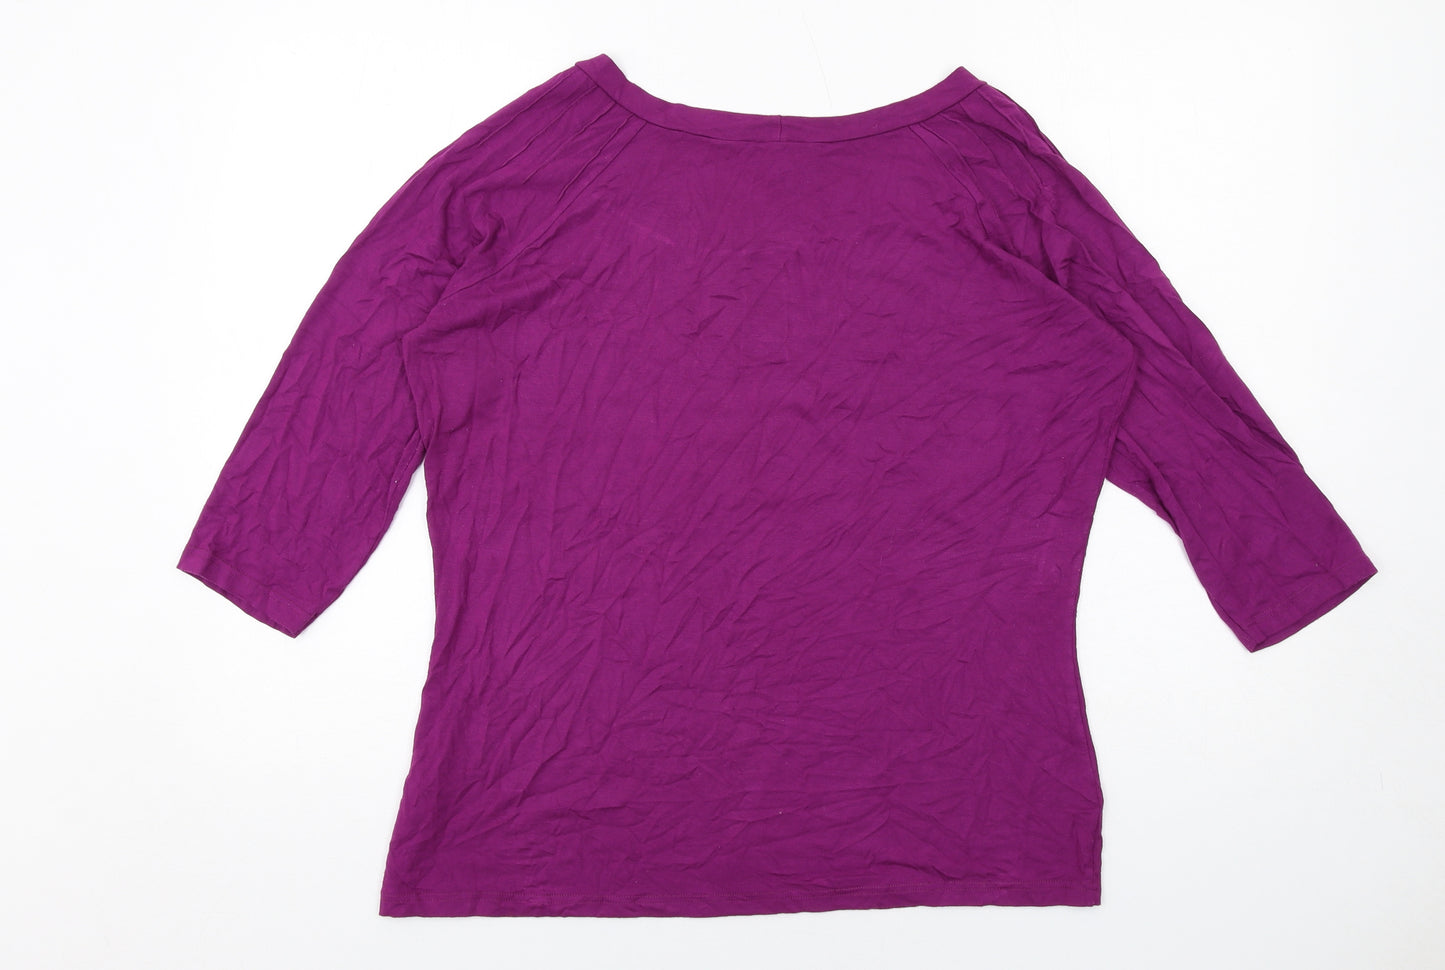 Kaliko Womens Purple Viscose Basic T-Shirt Size 20 Boat Neck